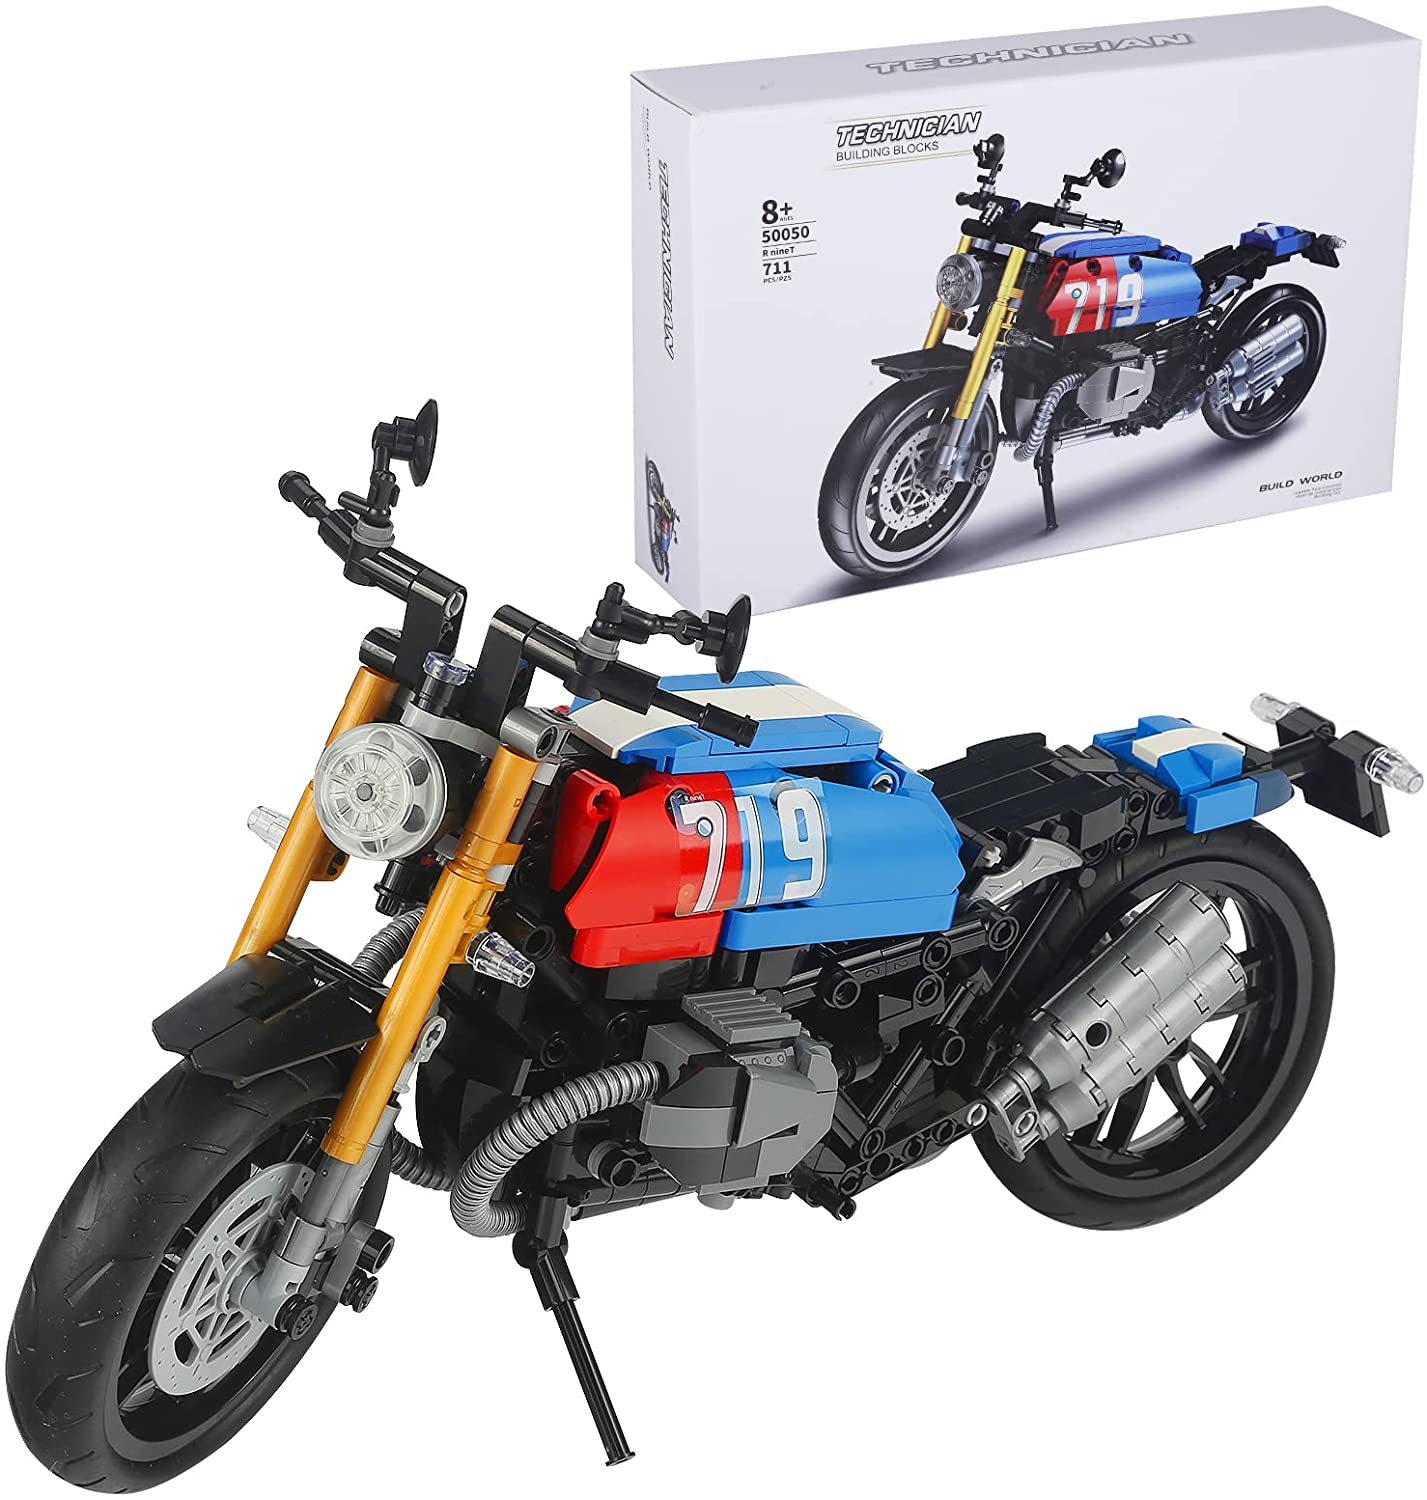 Army Moto & Gate BricTek Building Block Construction Toy Brick Motorcycle 25001 